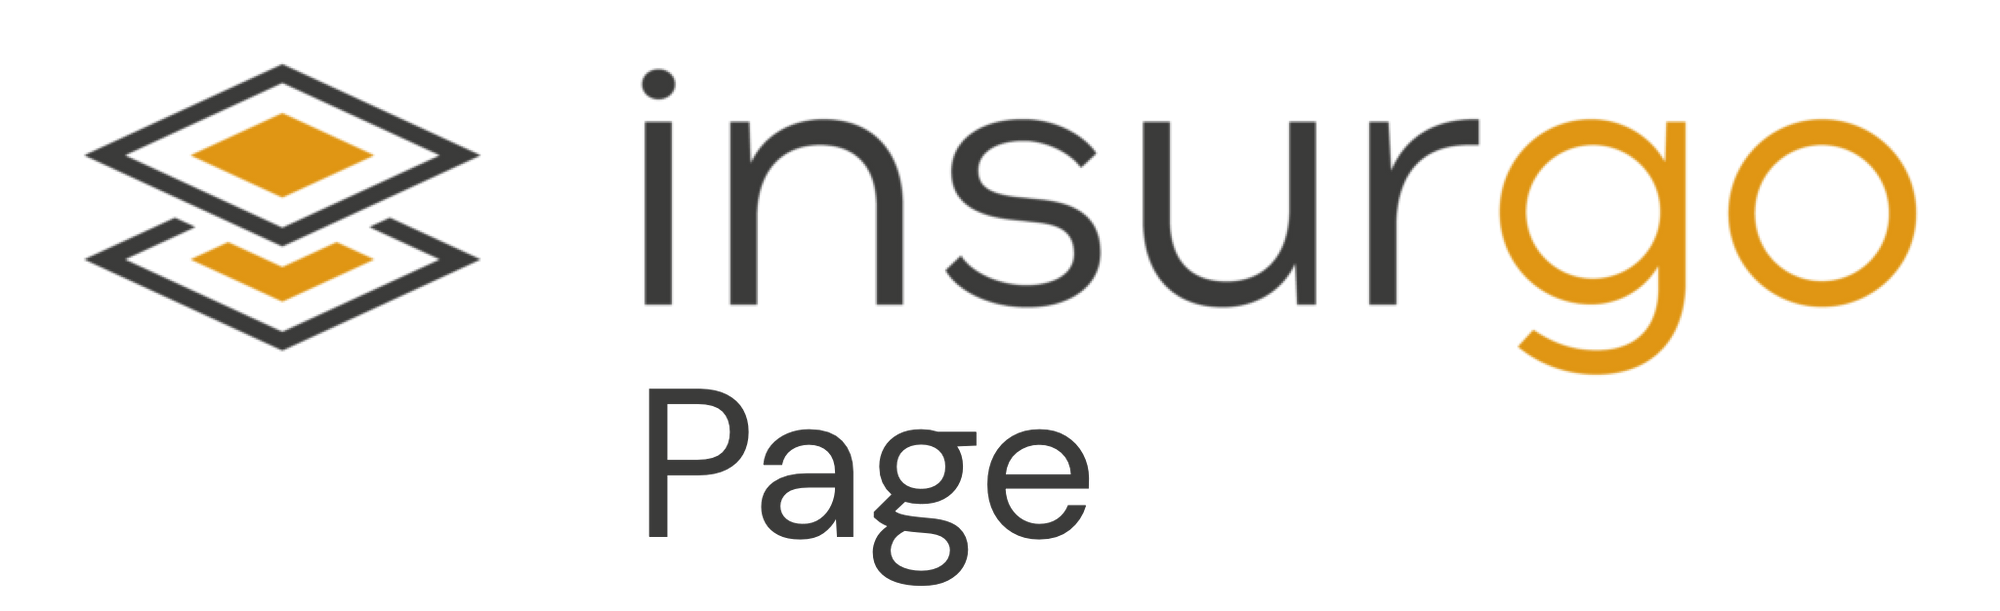 Insurgo Page Logo v2.png